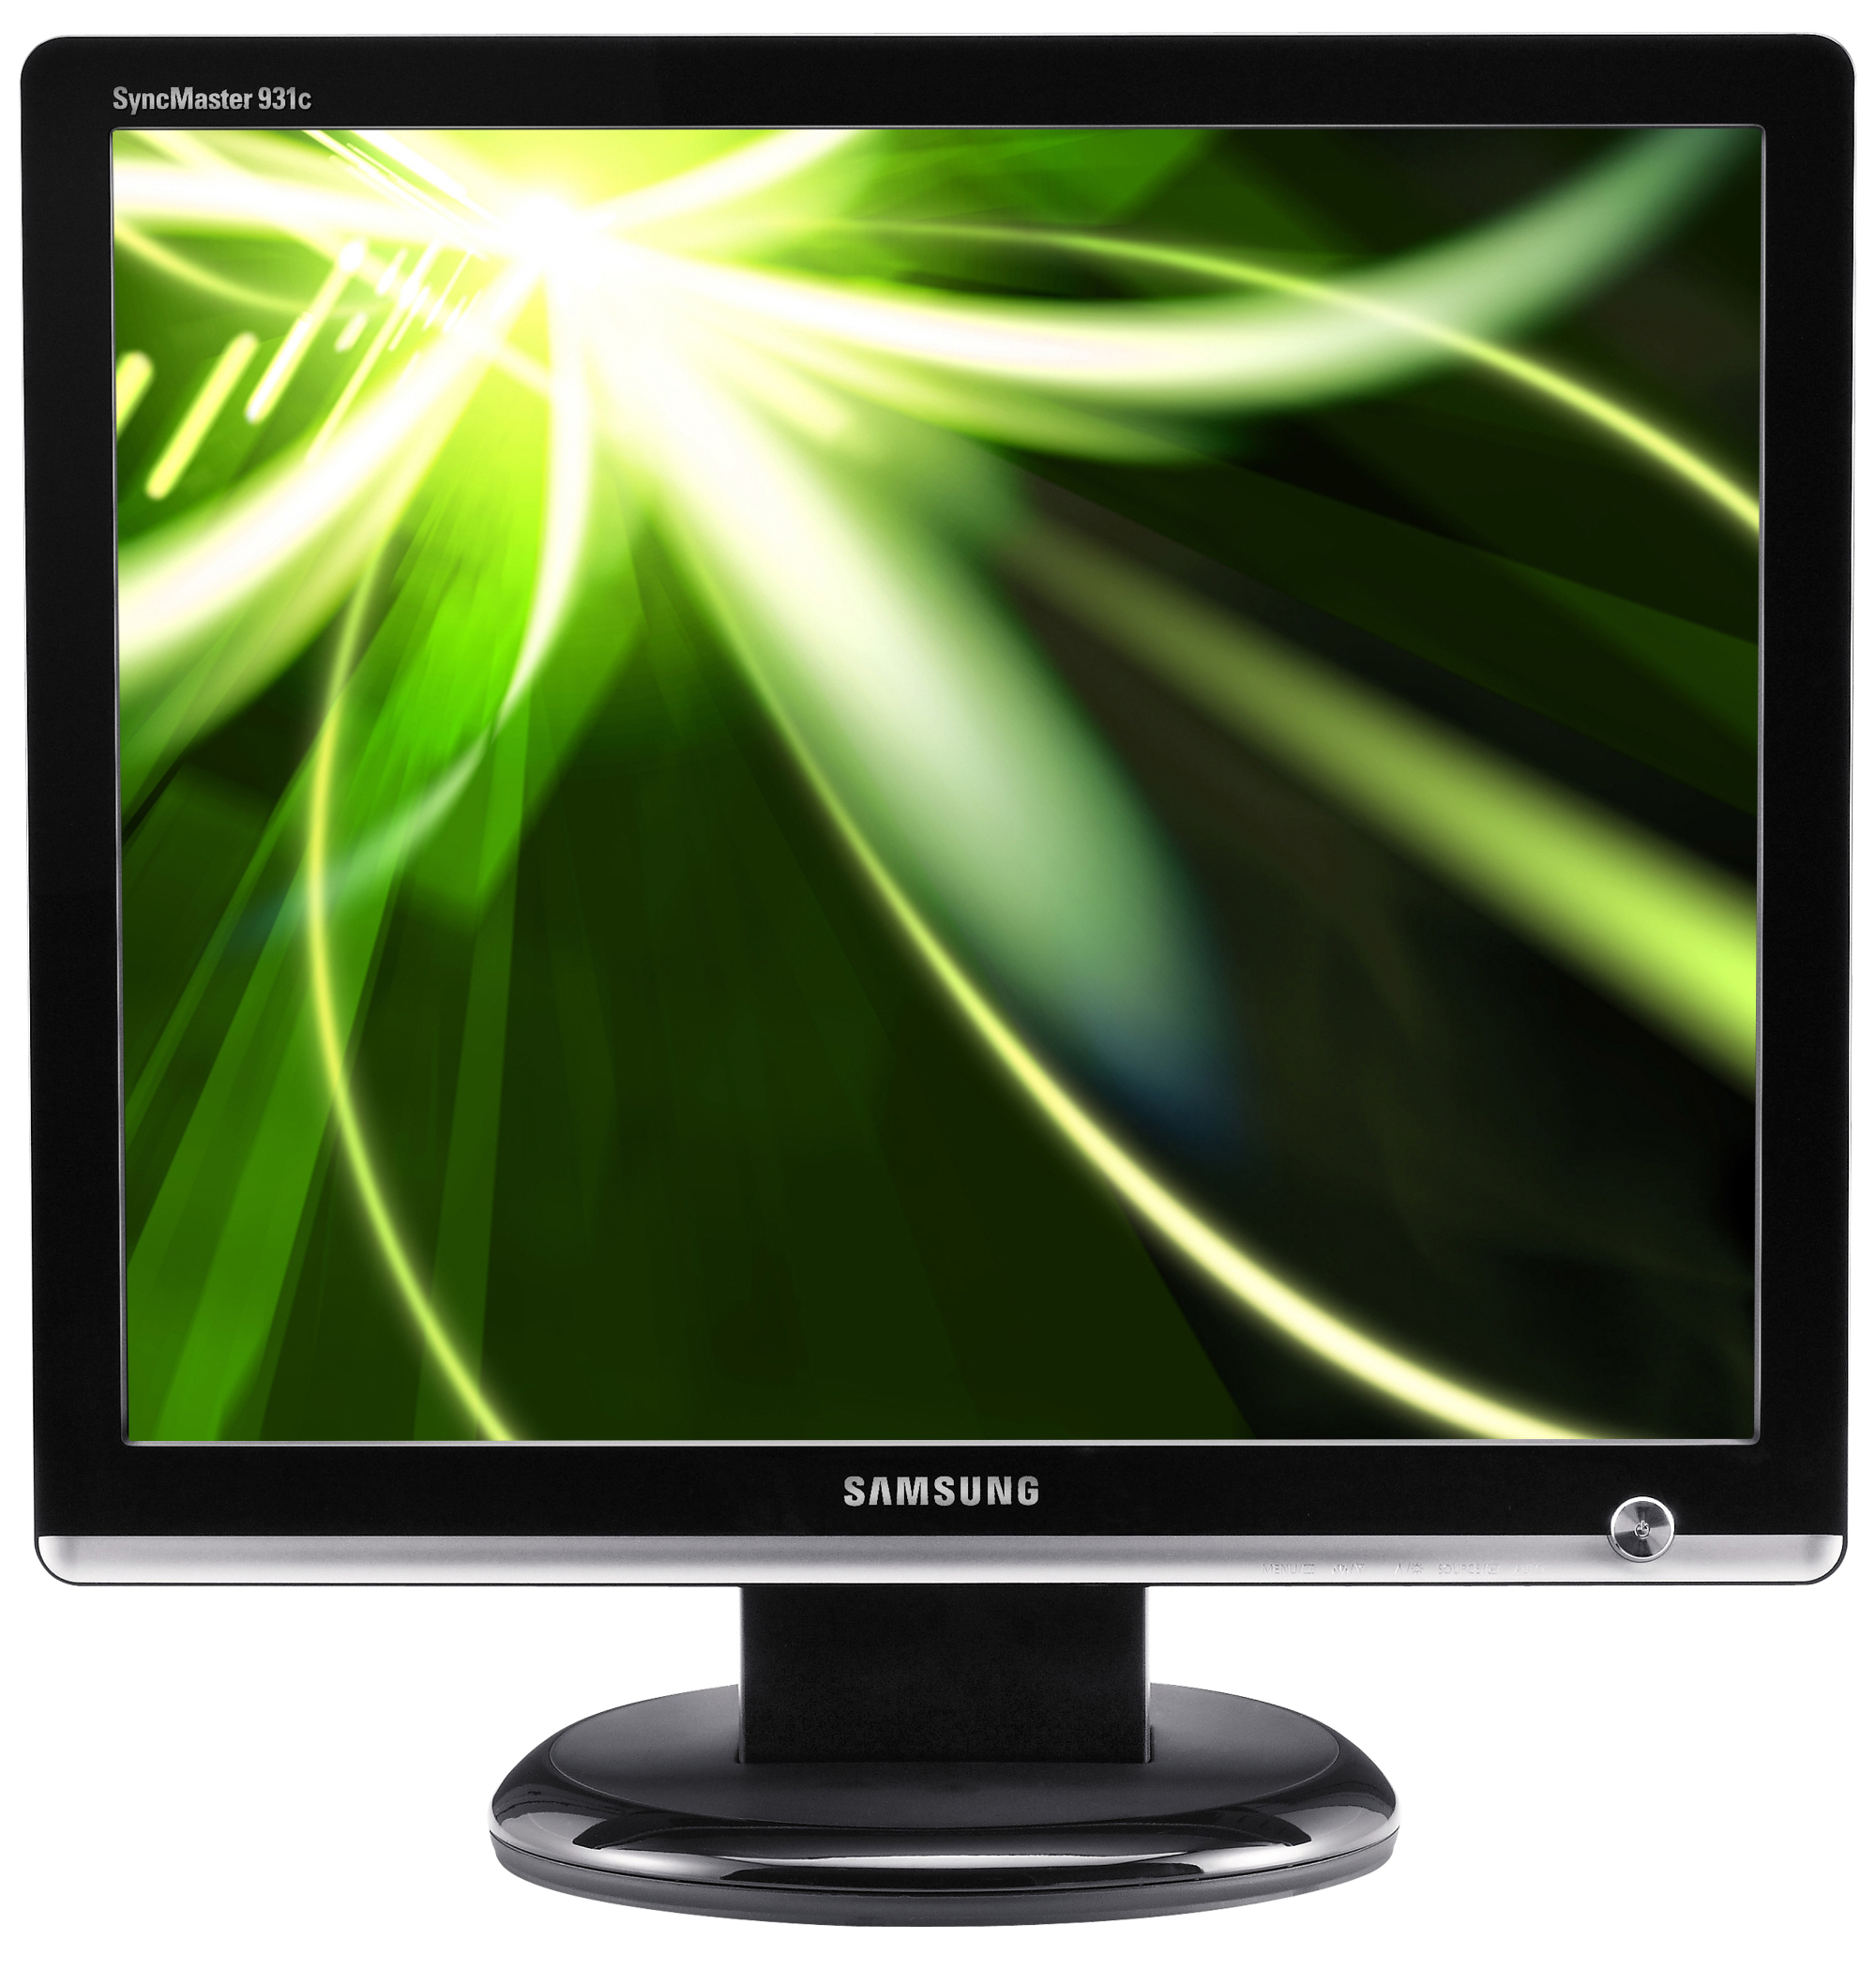 Monitor SAMSUNG Sync Master 931C LCD, 19 inch, 1280 x 1024, VGA, DVI